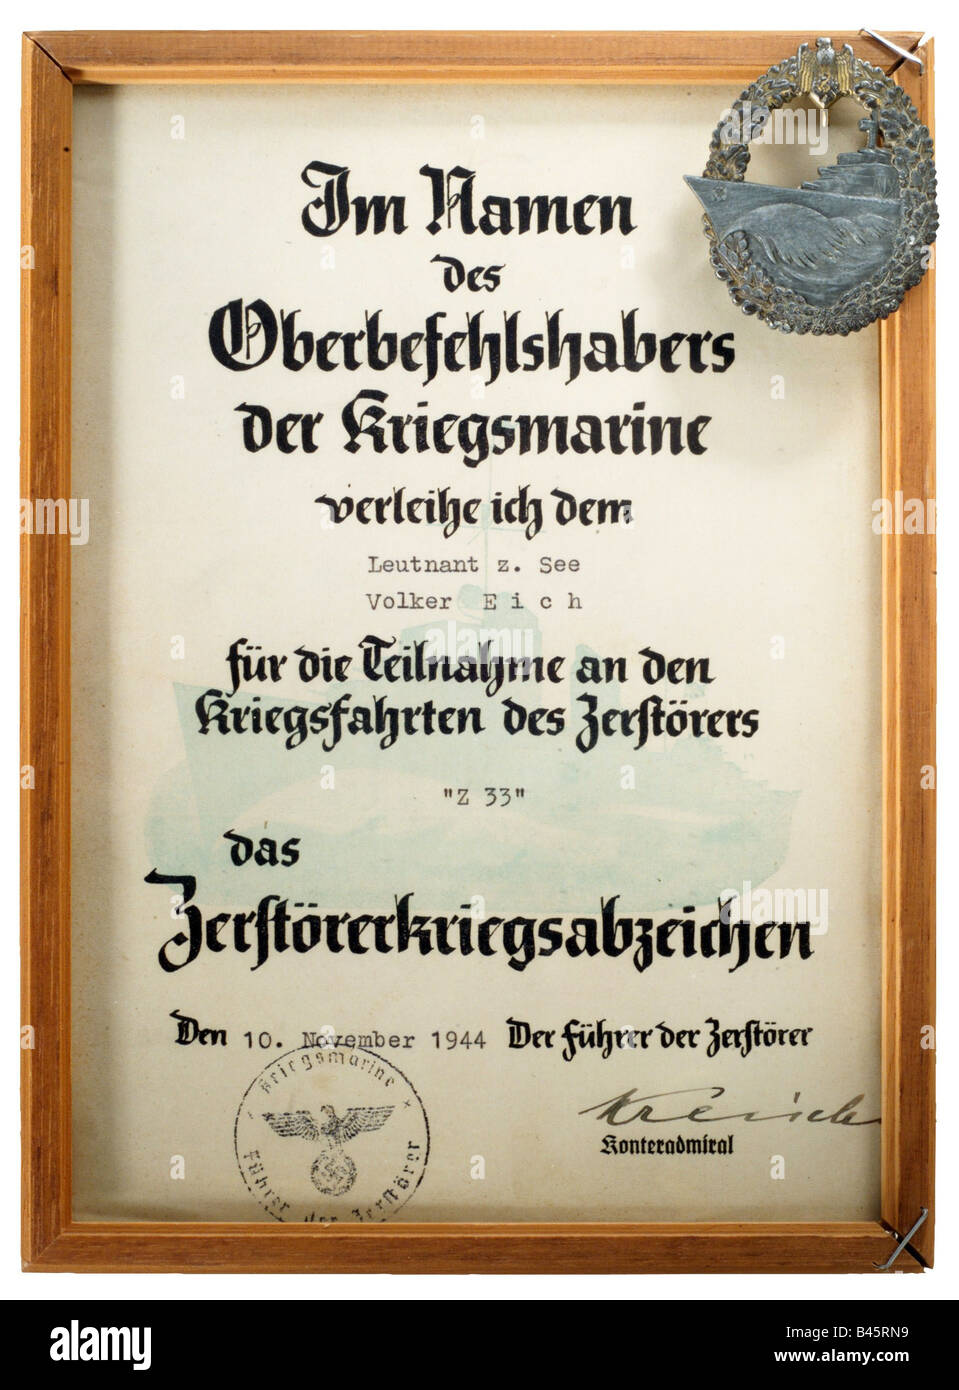 decorations, Germany, Destroyer War Badge, instituted 1940, awarding document for lieutenant Volker Eich, 10.11.1944, Second World War, decoration, , Stock Photo